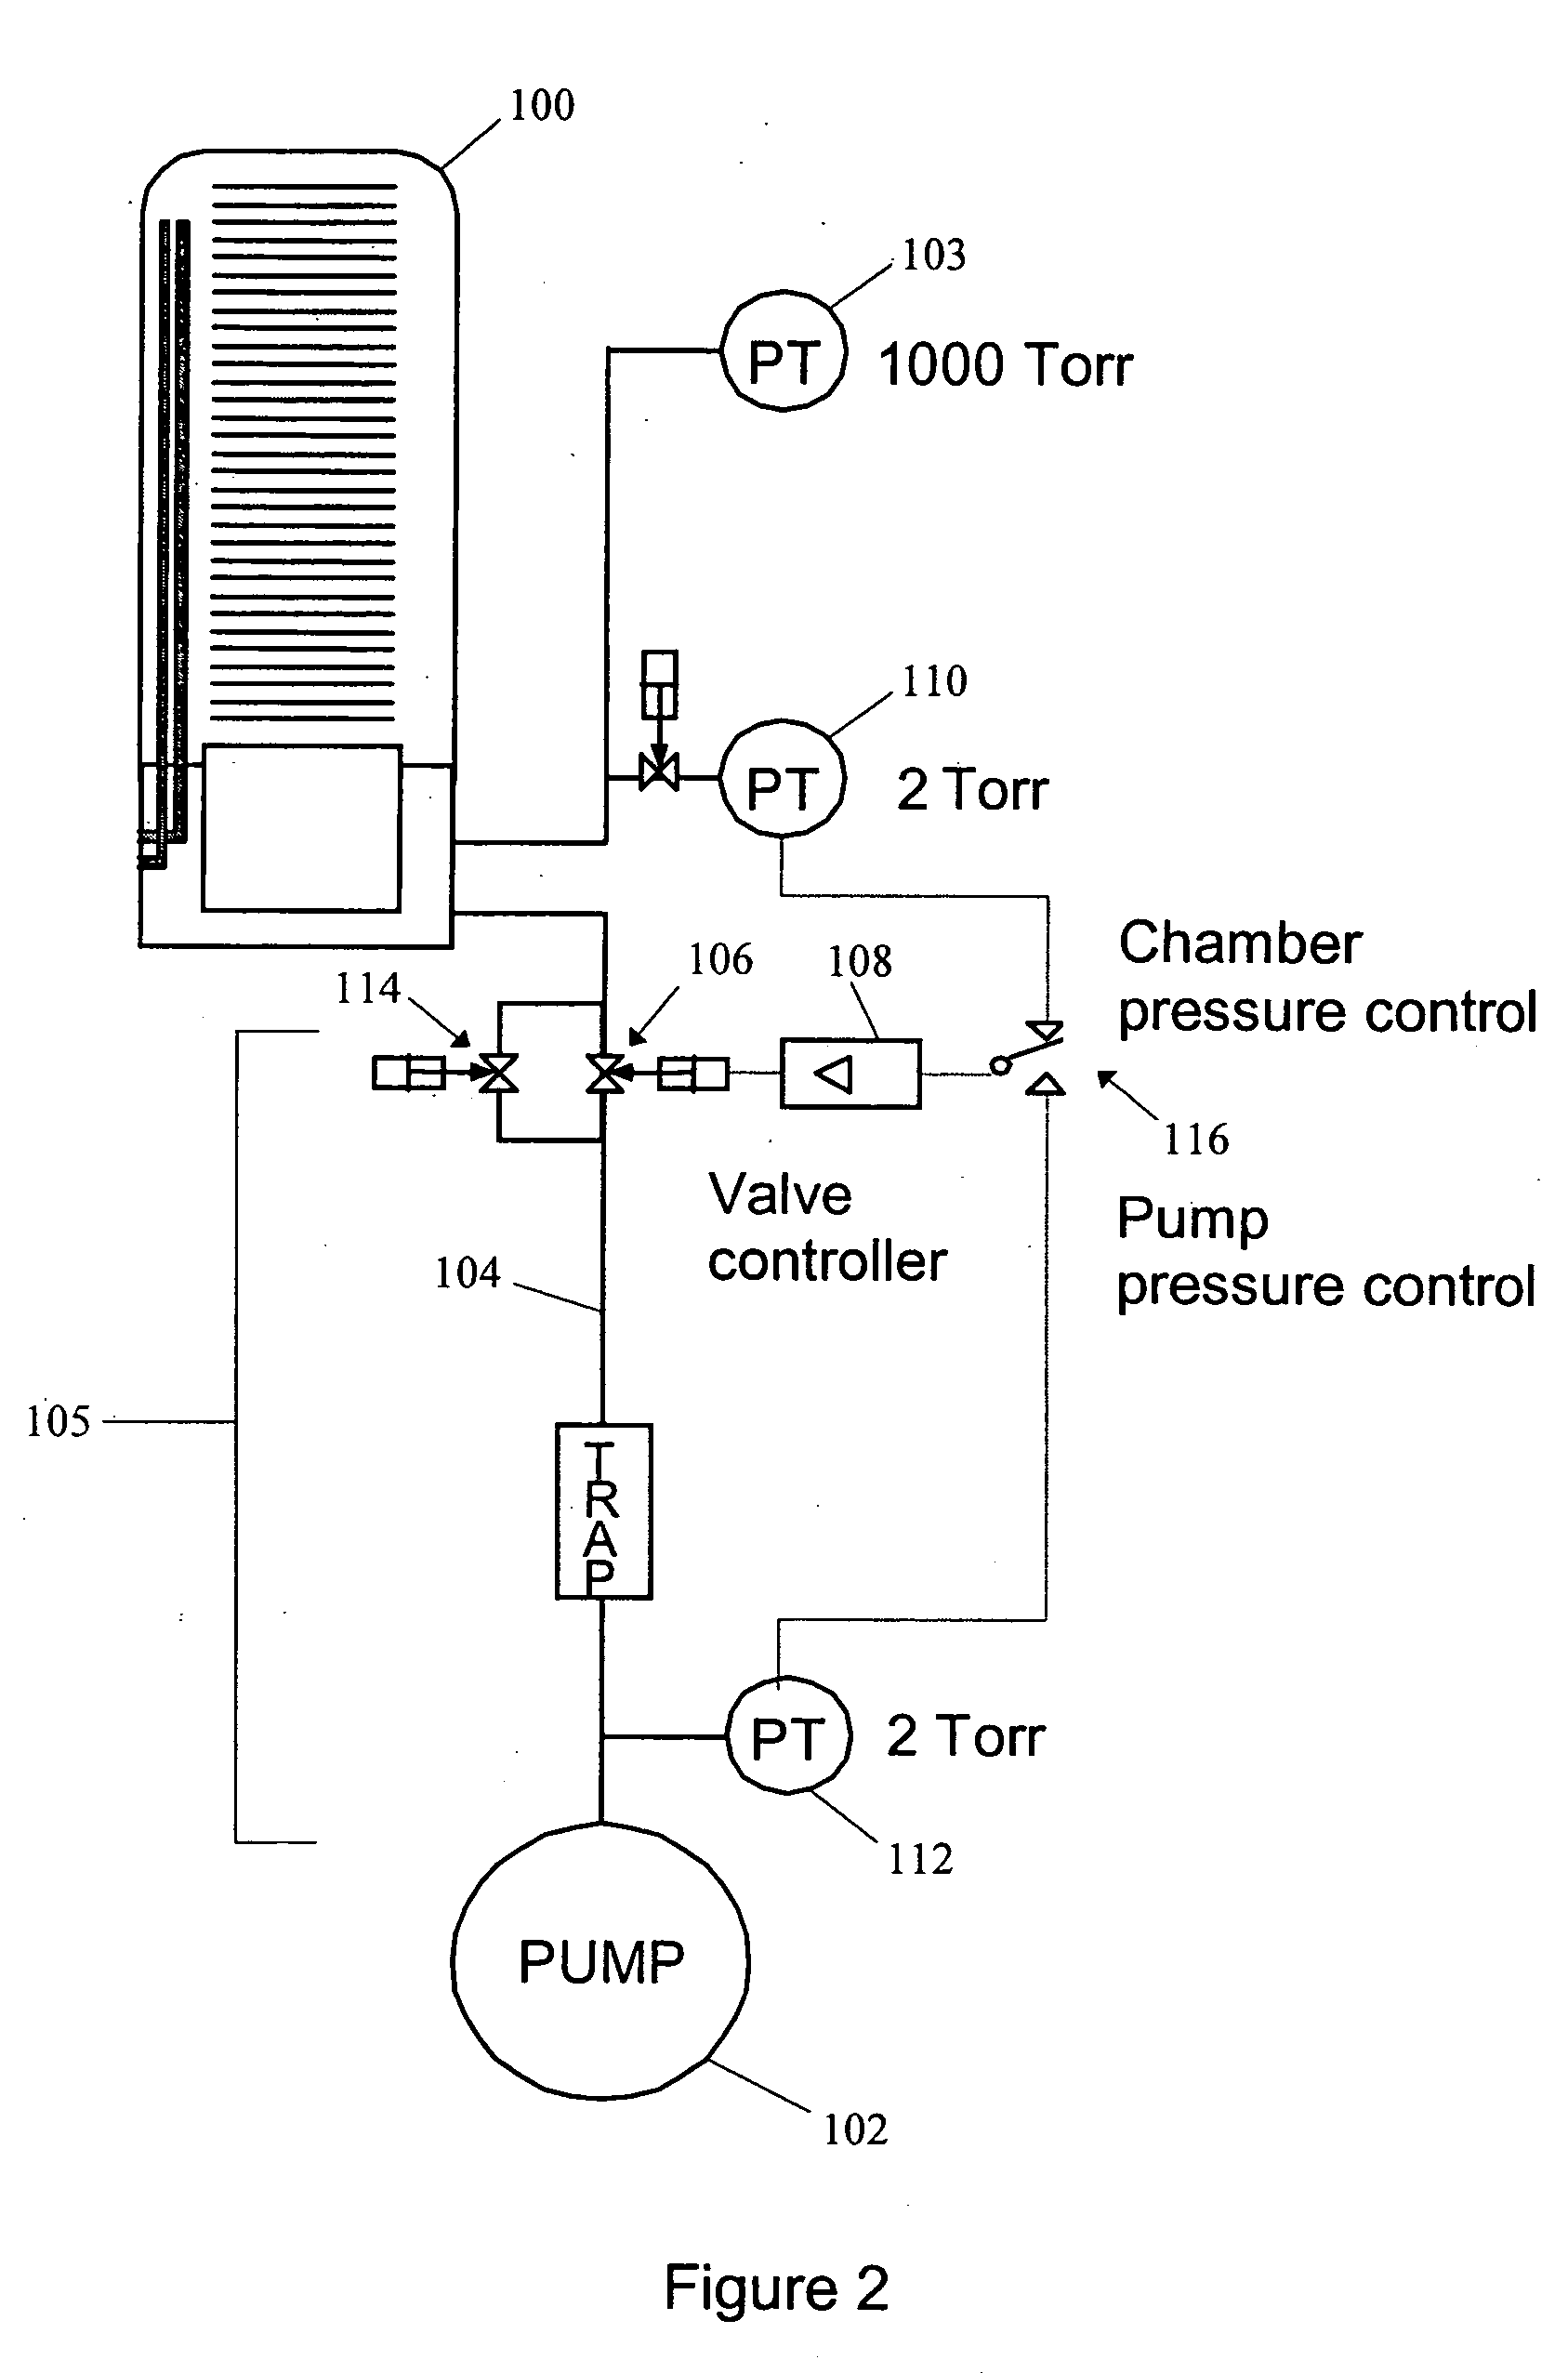 Pressure control system